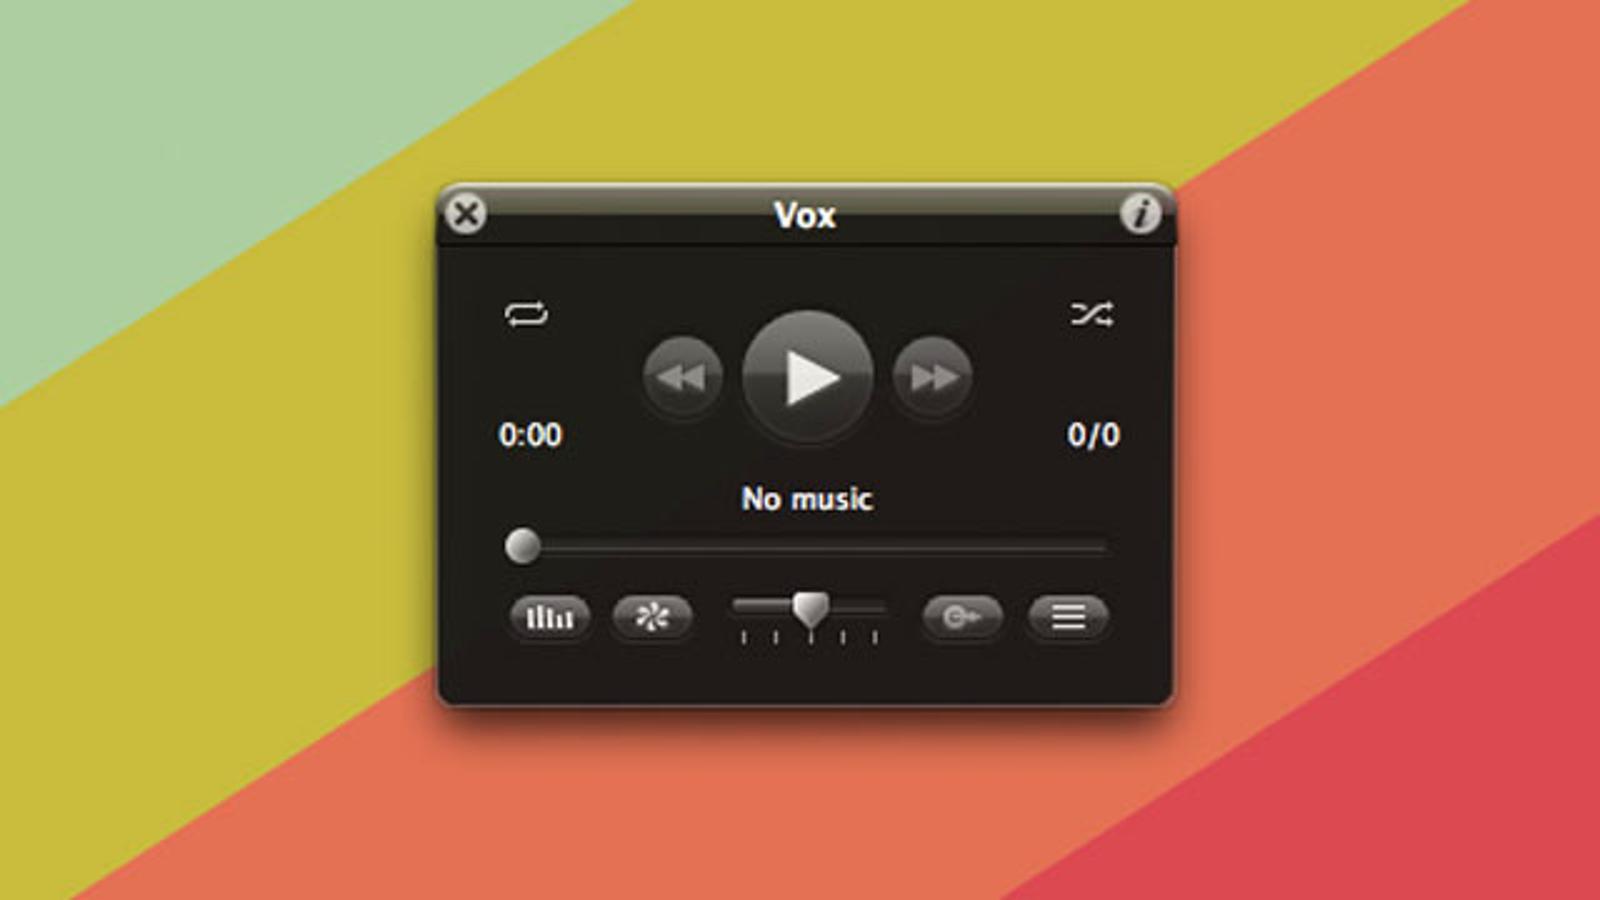 vox player controls